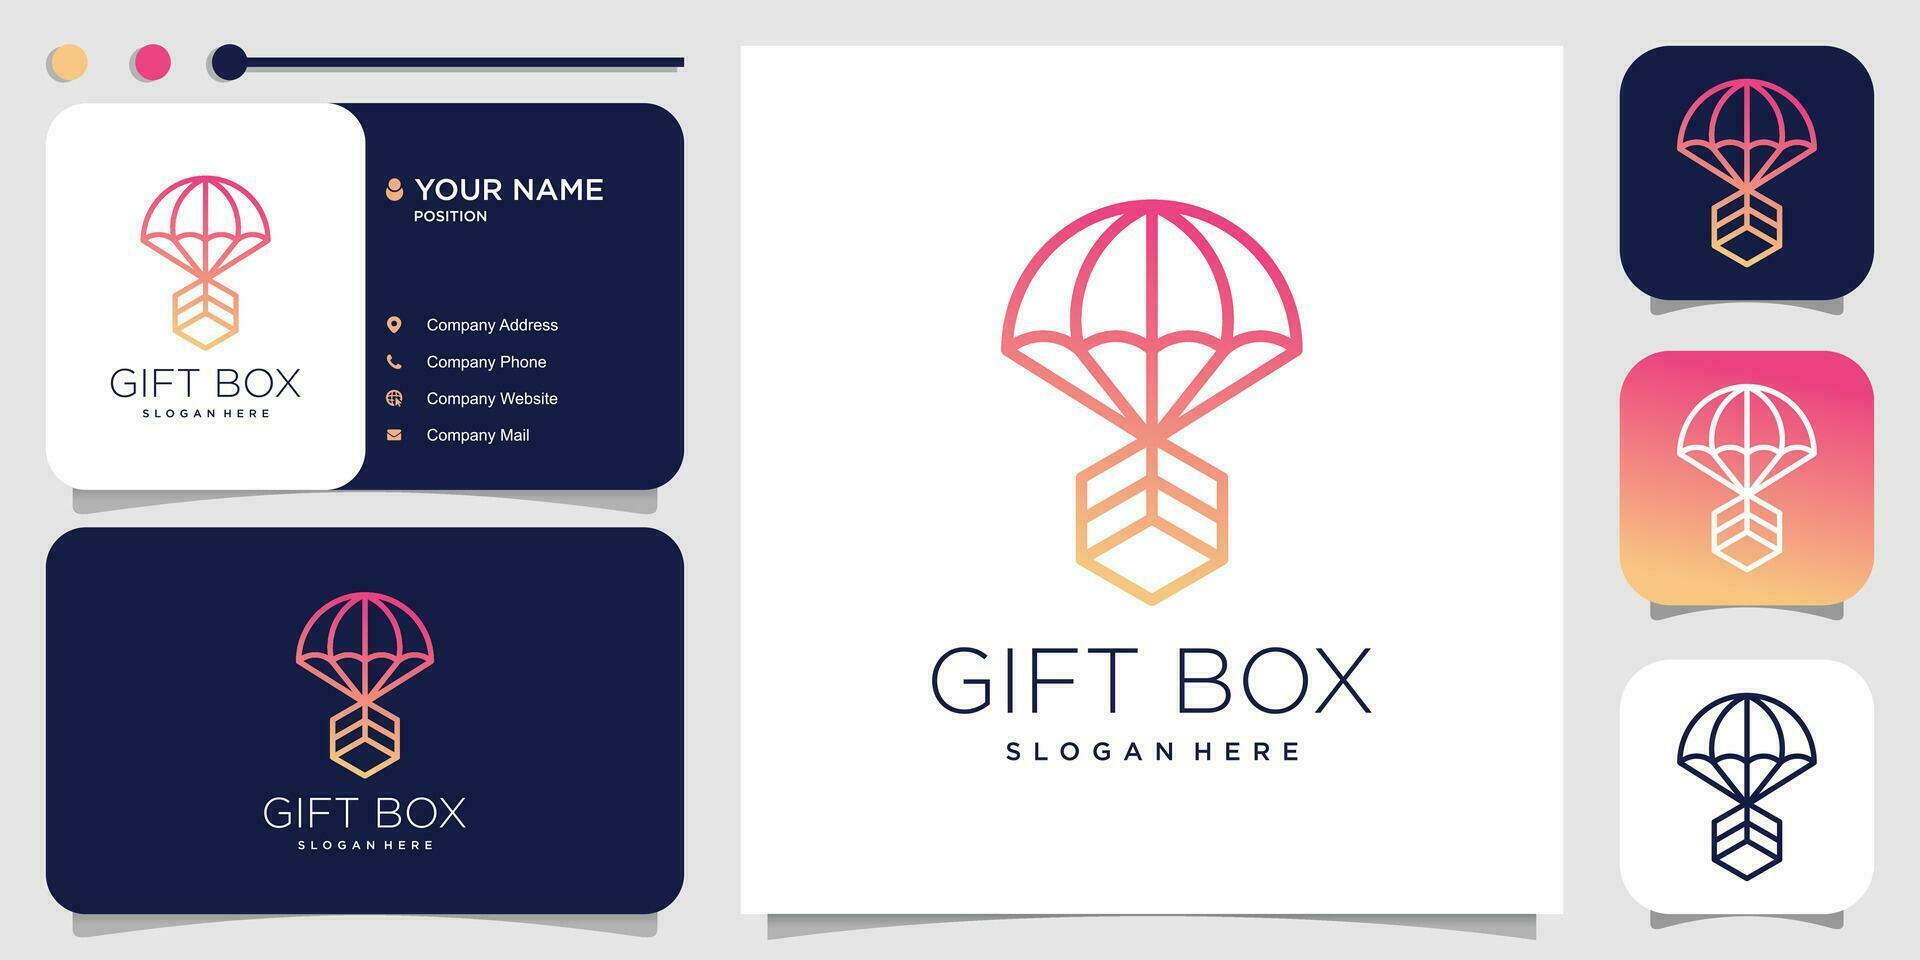 Gift box logo design element vector with creative idea